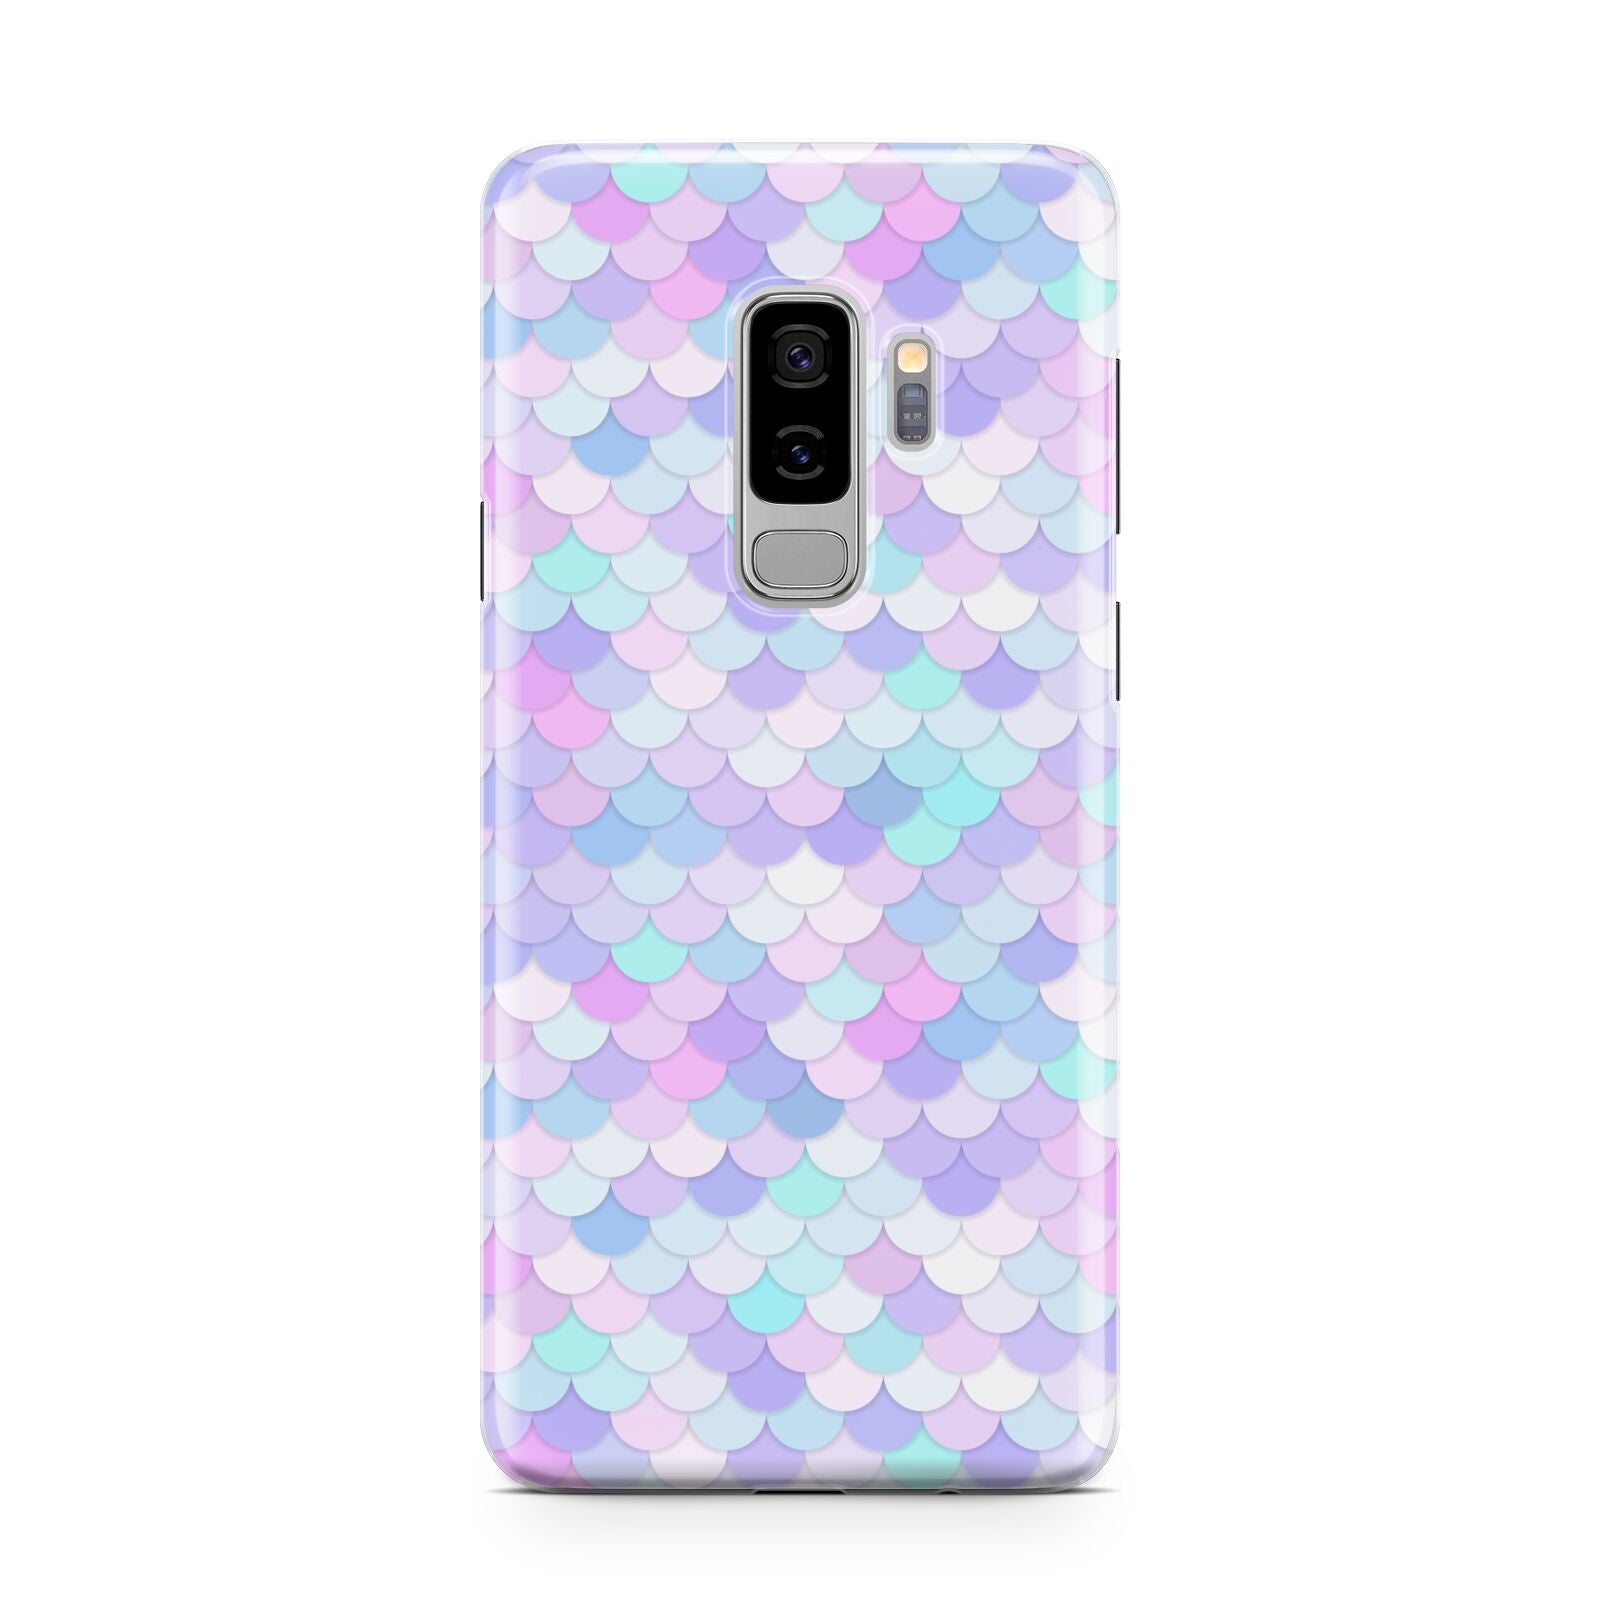 Mermaid Samsung Galaxy S9 Plus Case on Silver phone